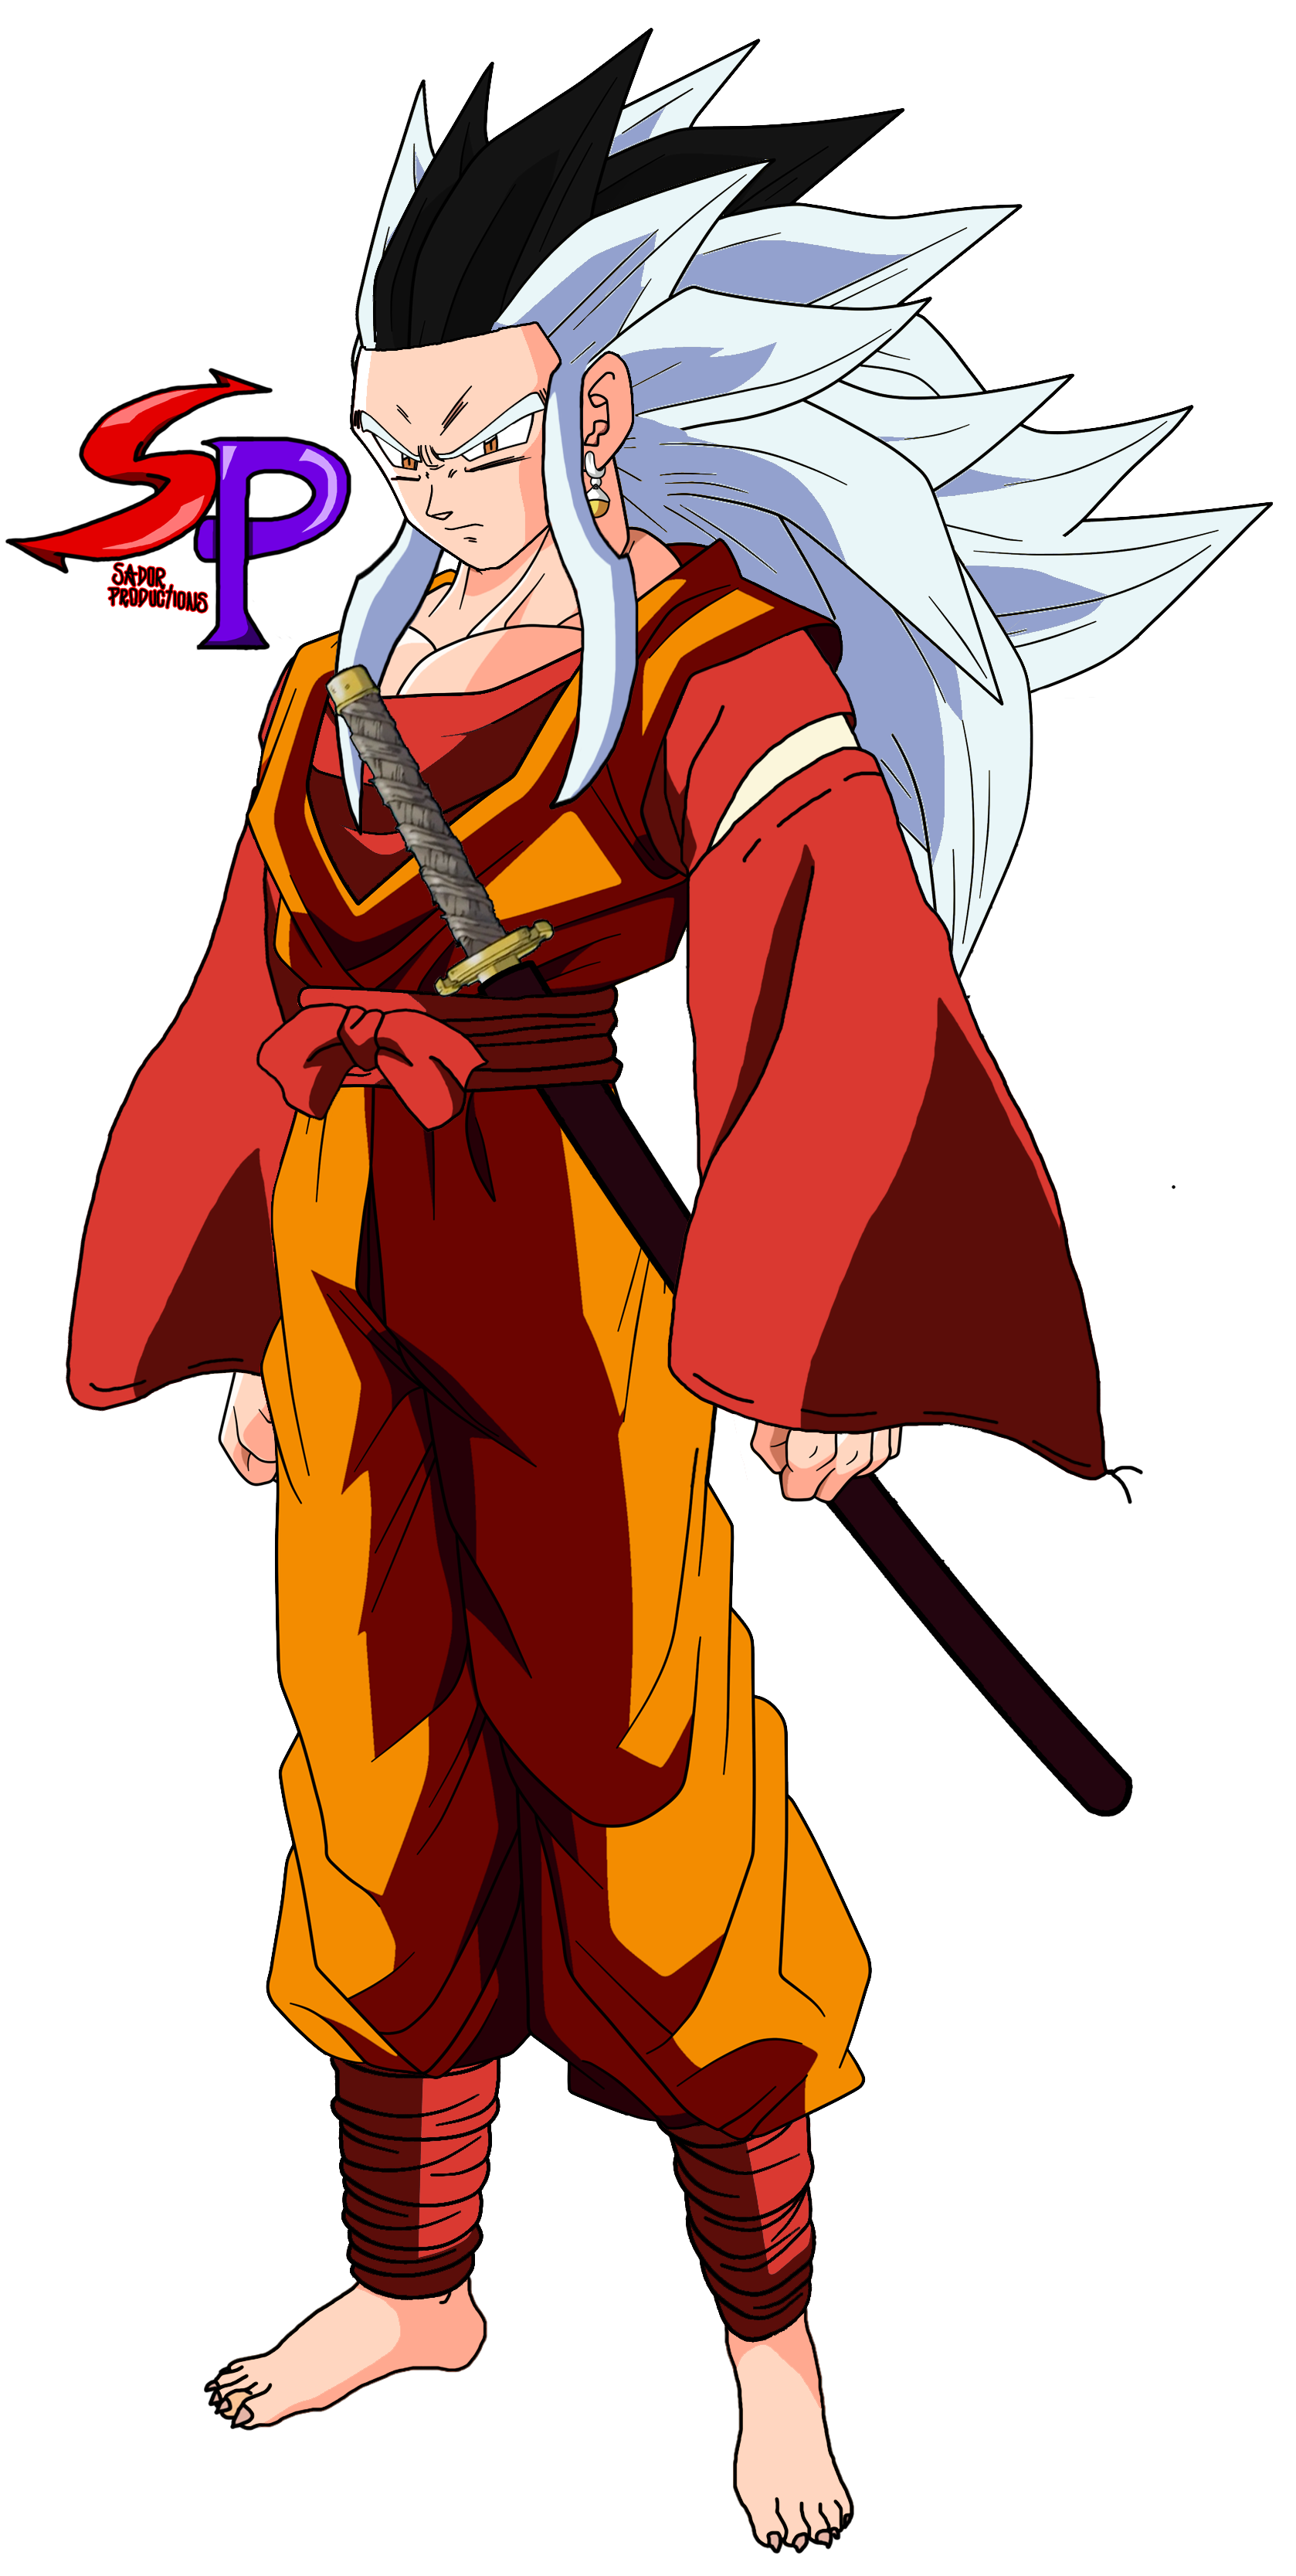 Goku Super Saiyajin by TeamSaiyanHD on DeviantArt